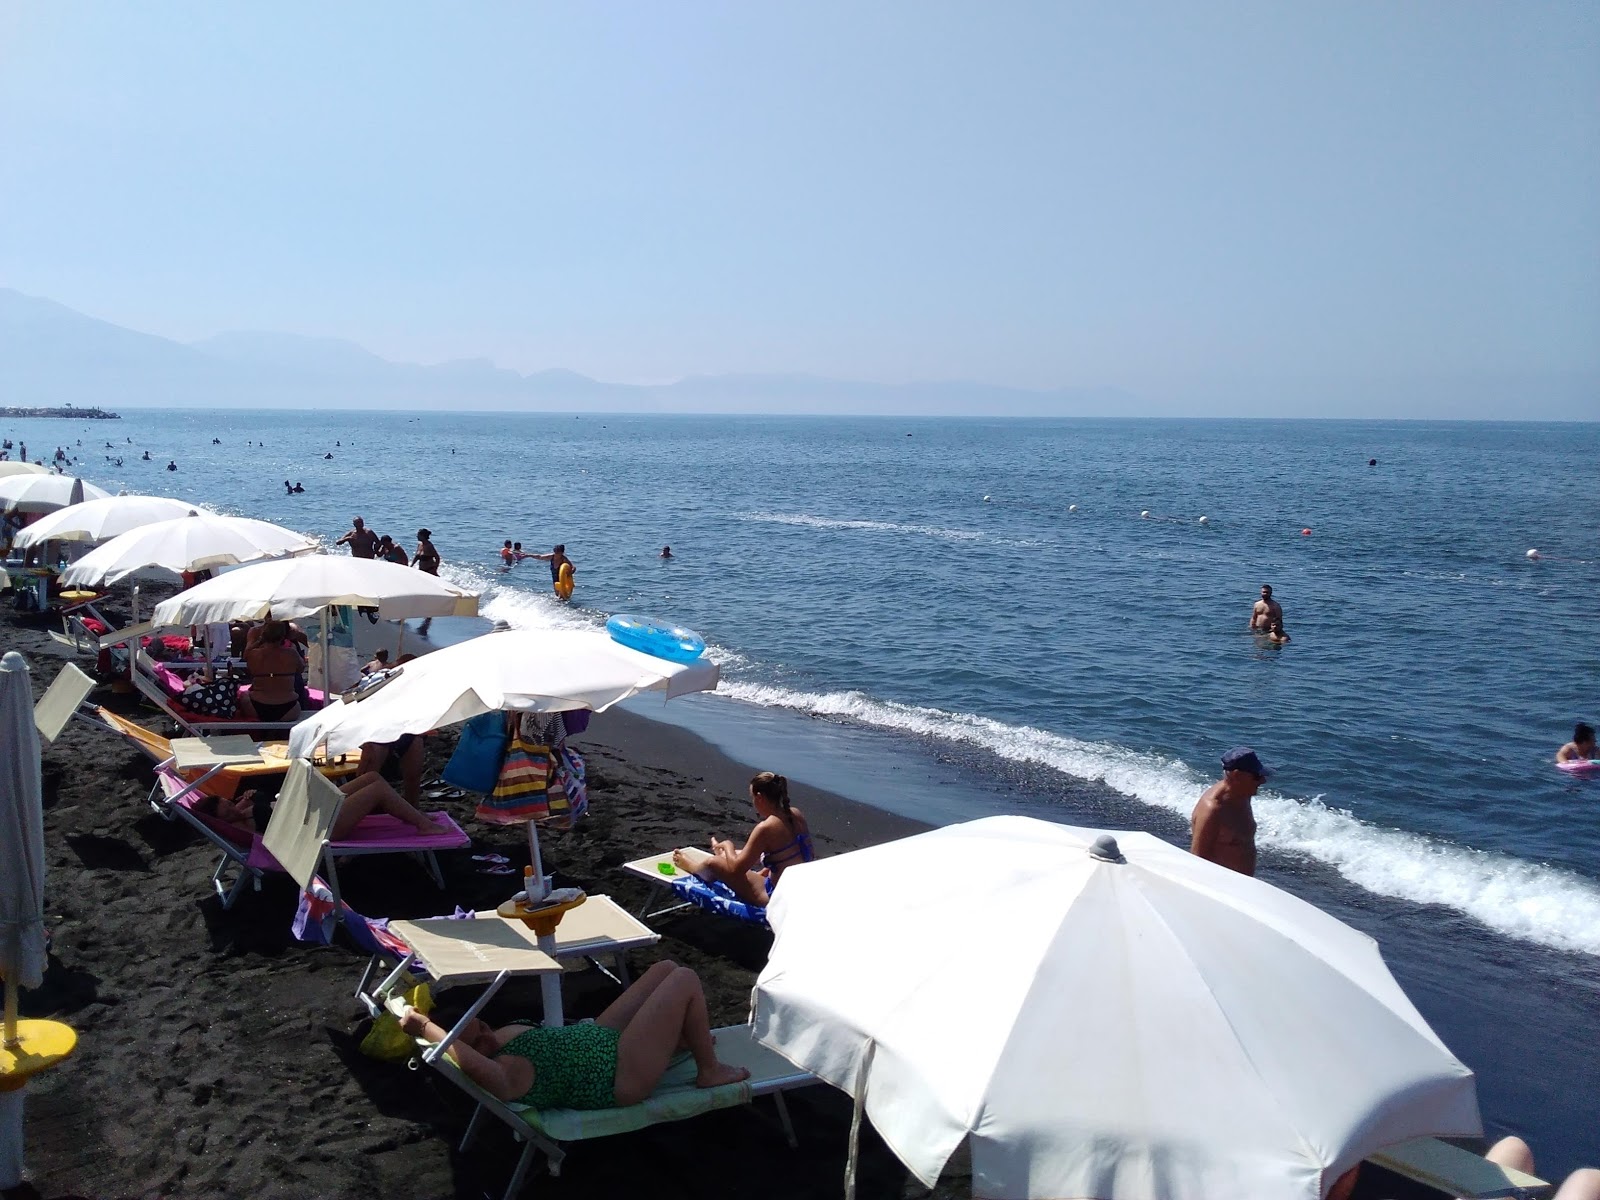 Foto av Spiaggia di via Litoranea med rymlig strand